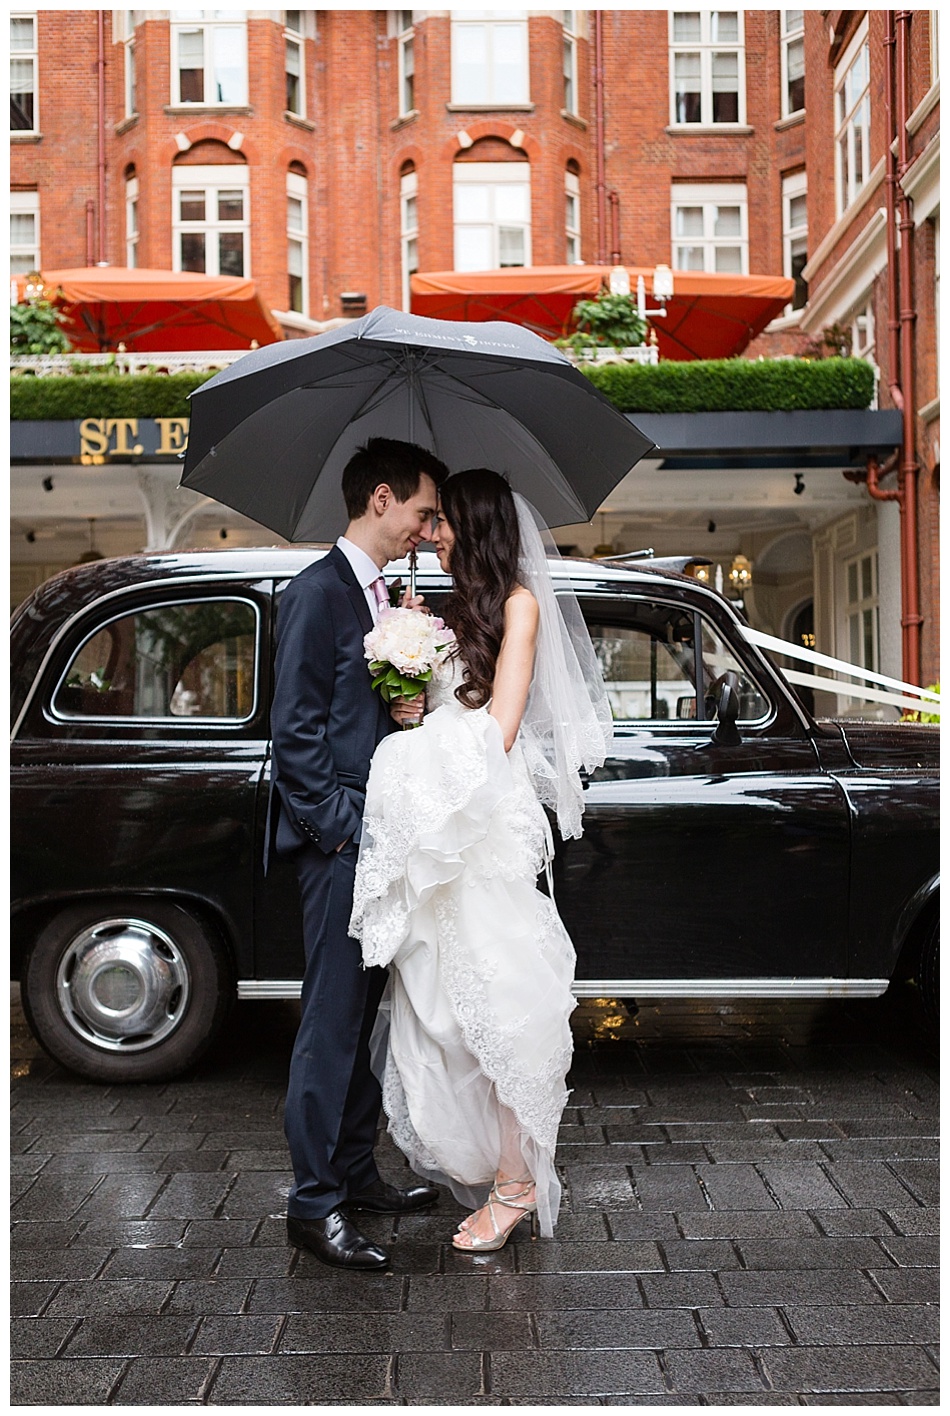 Rainy wedding day at St Ermins London